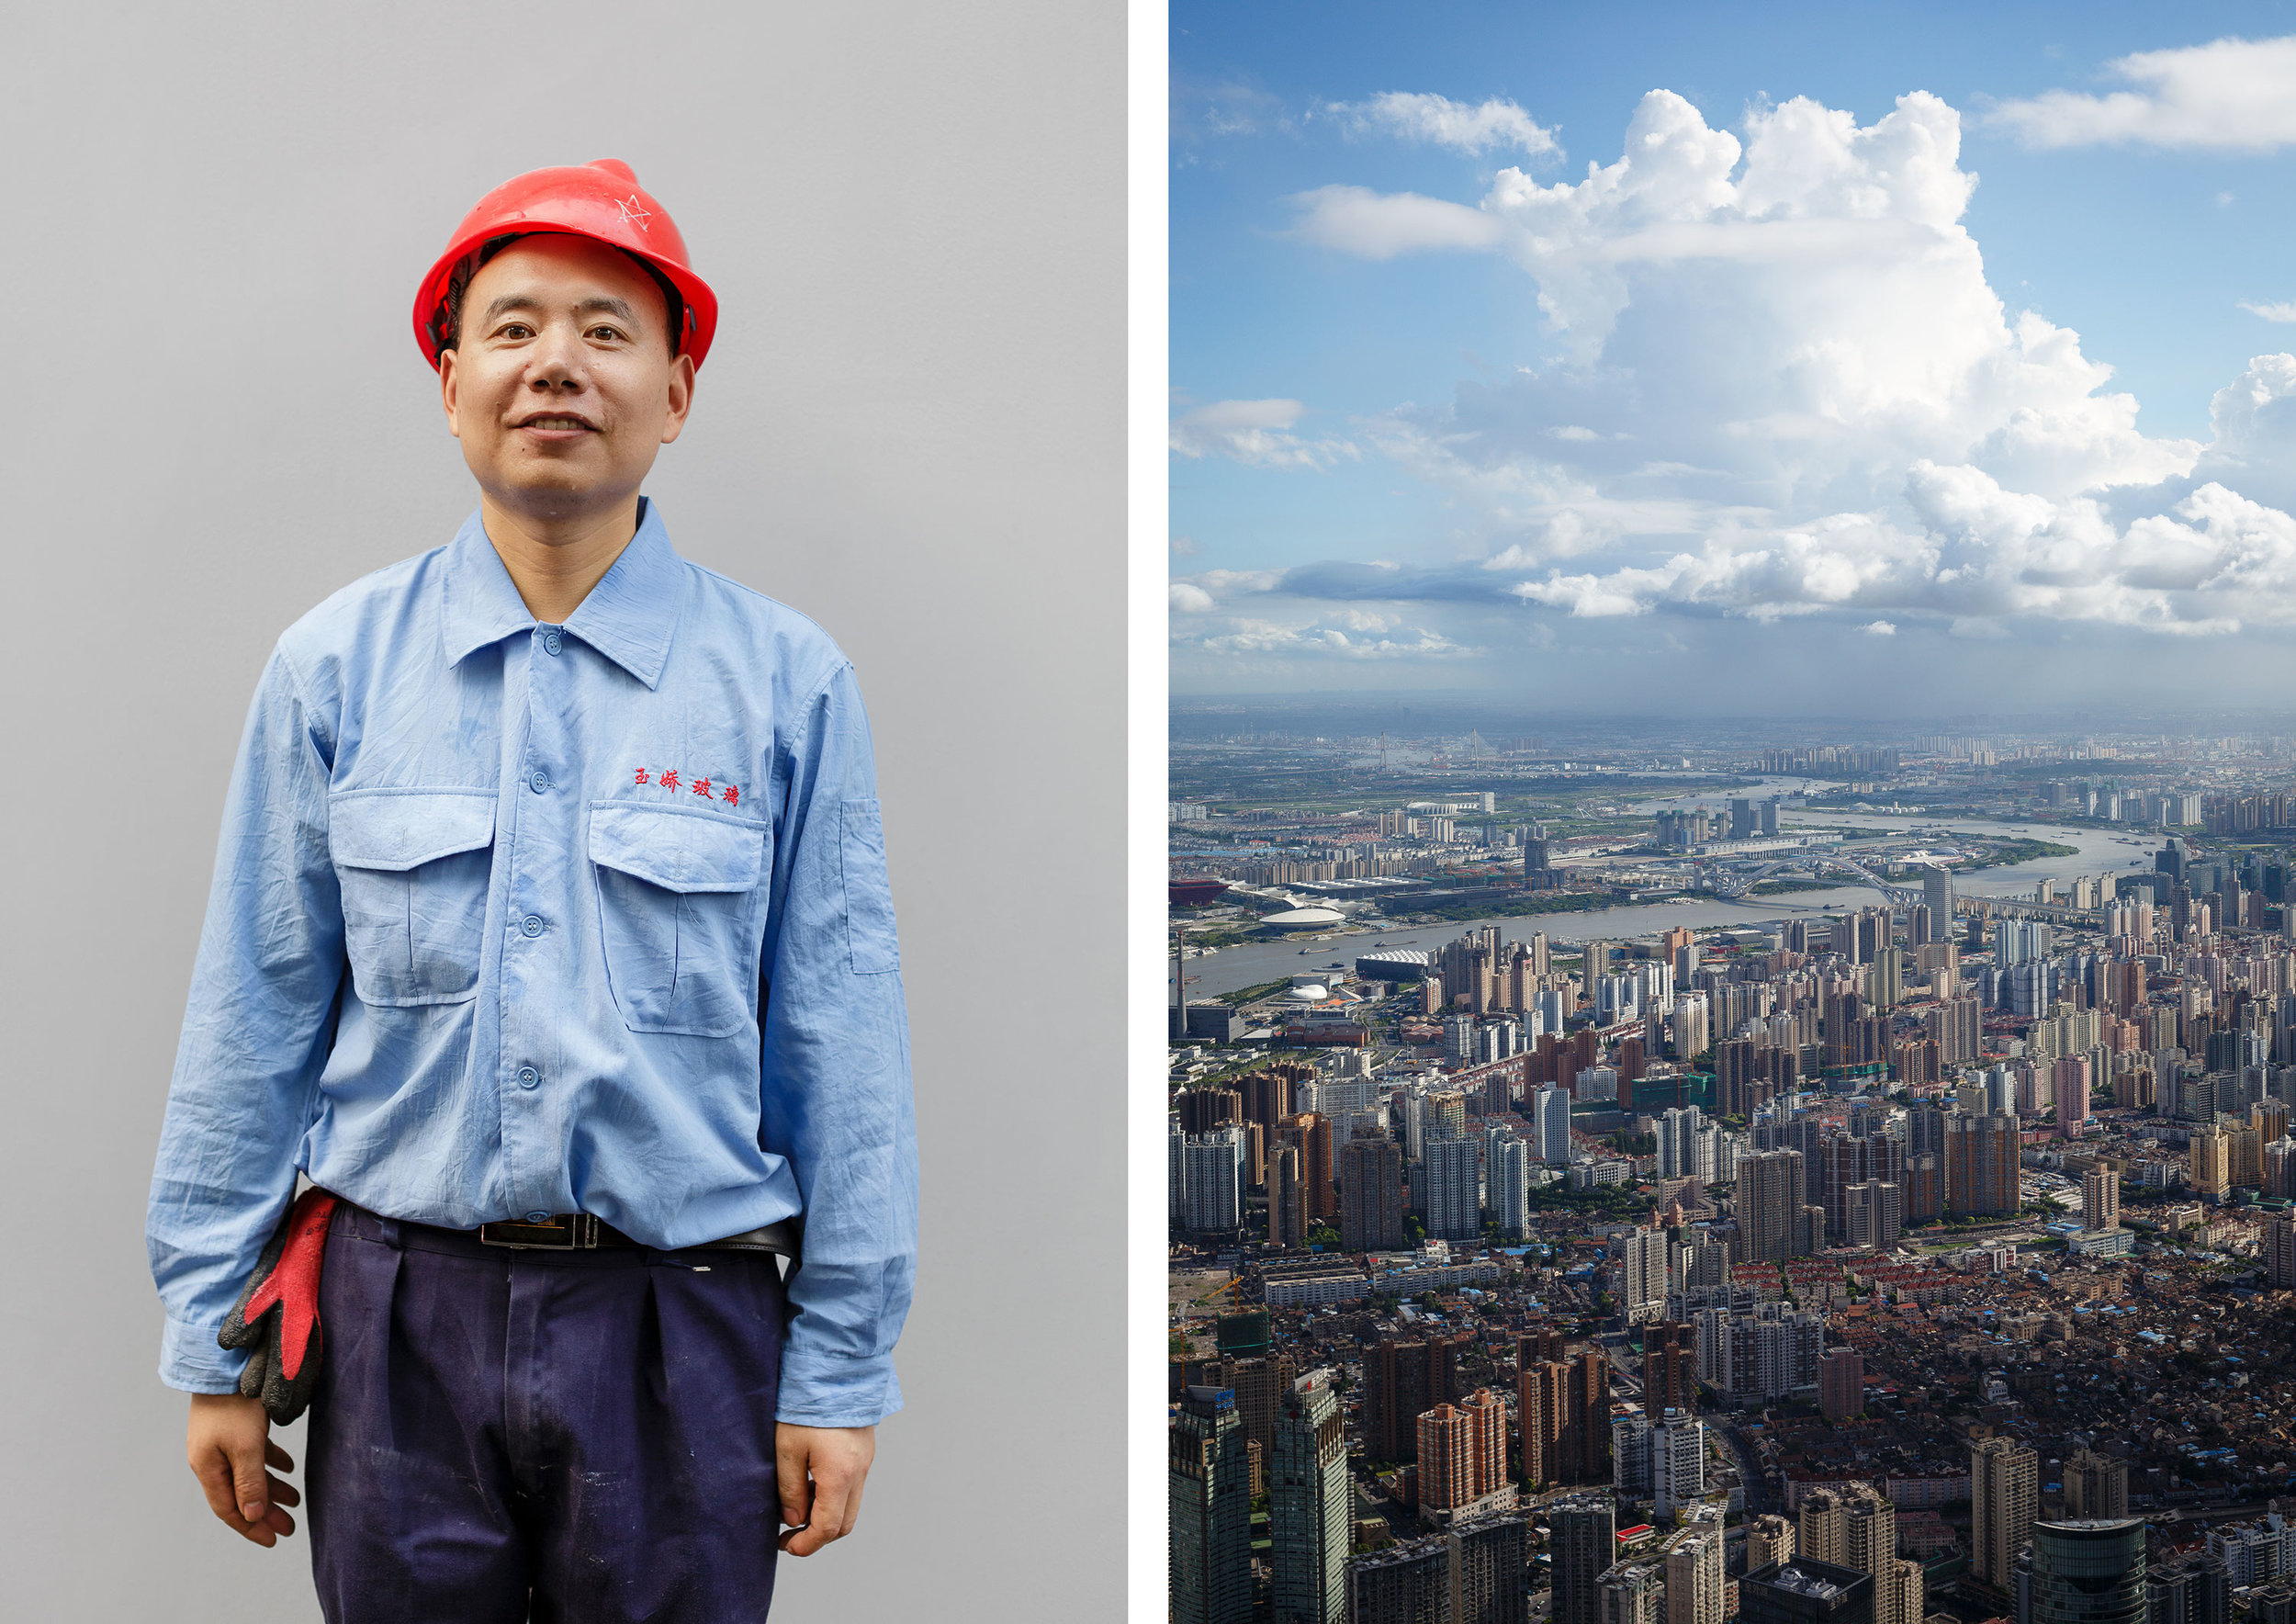 Shanghai_Tower-workers-and-building21.jpg